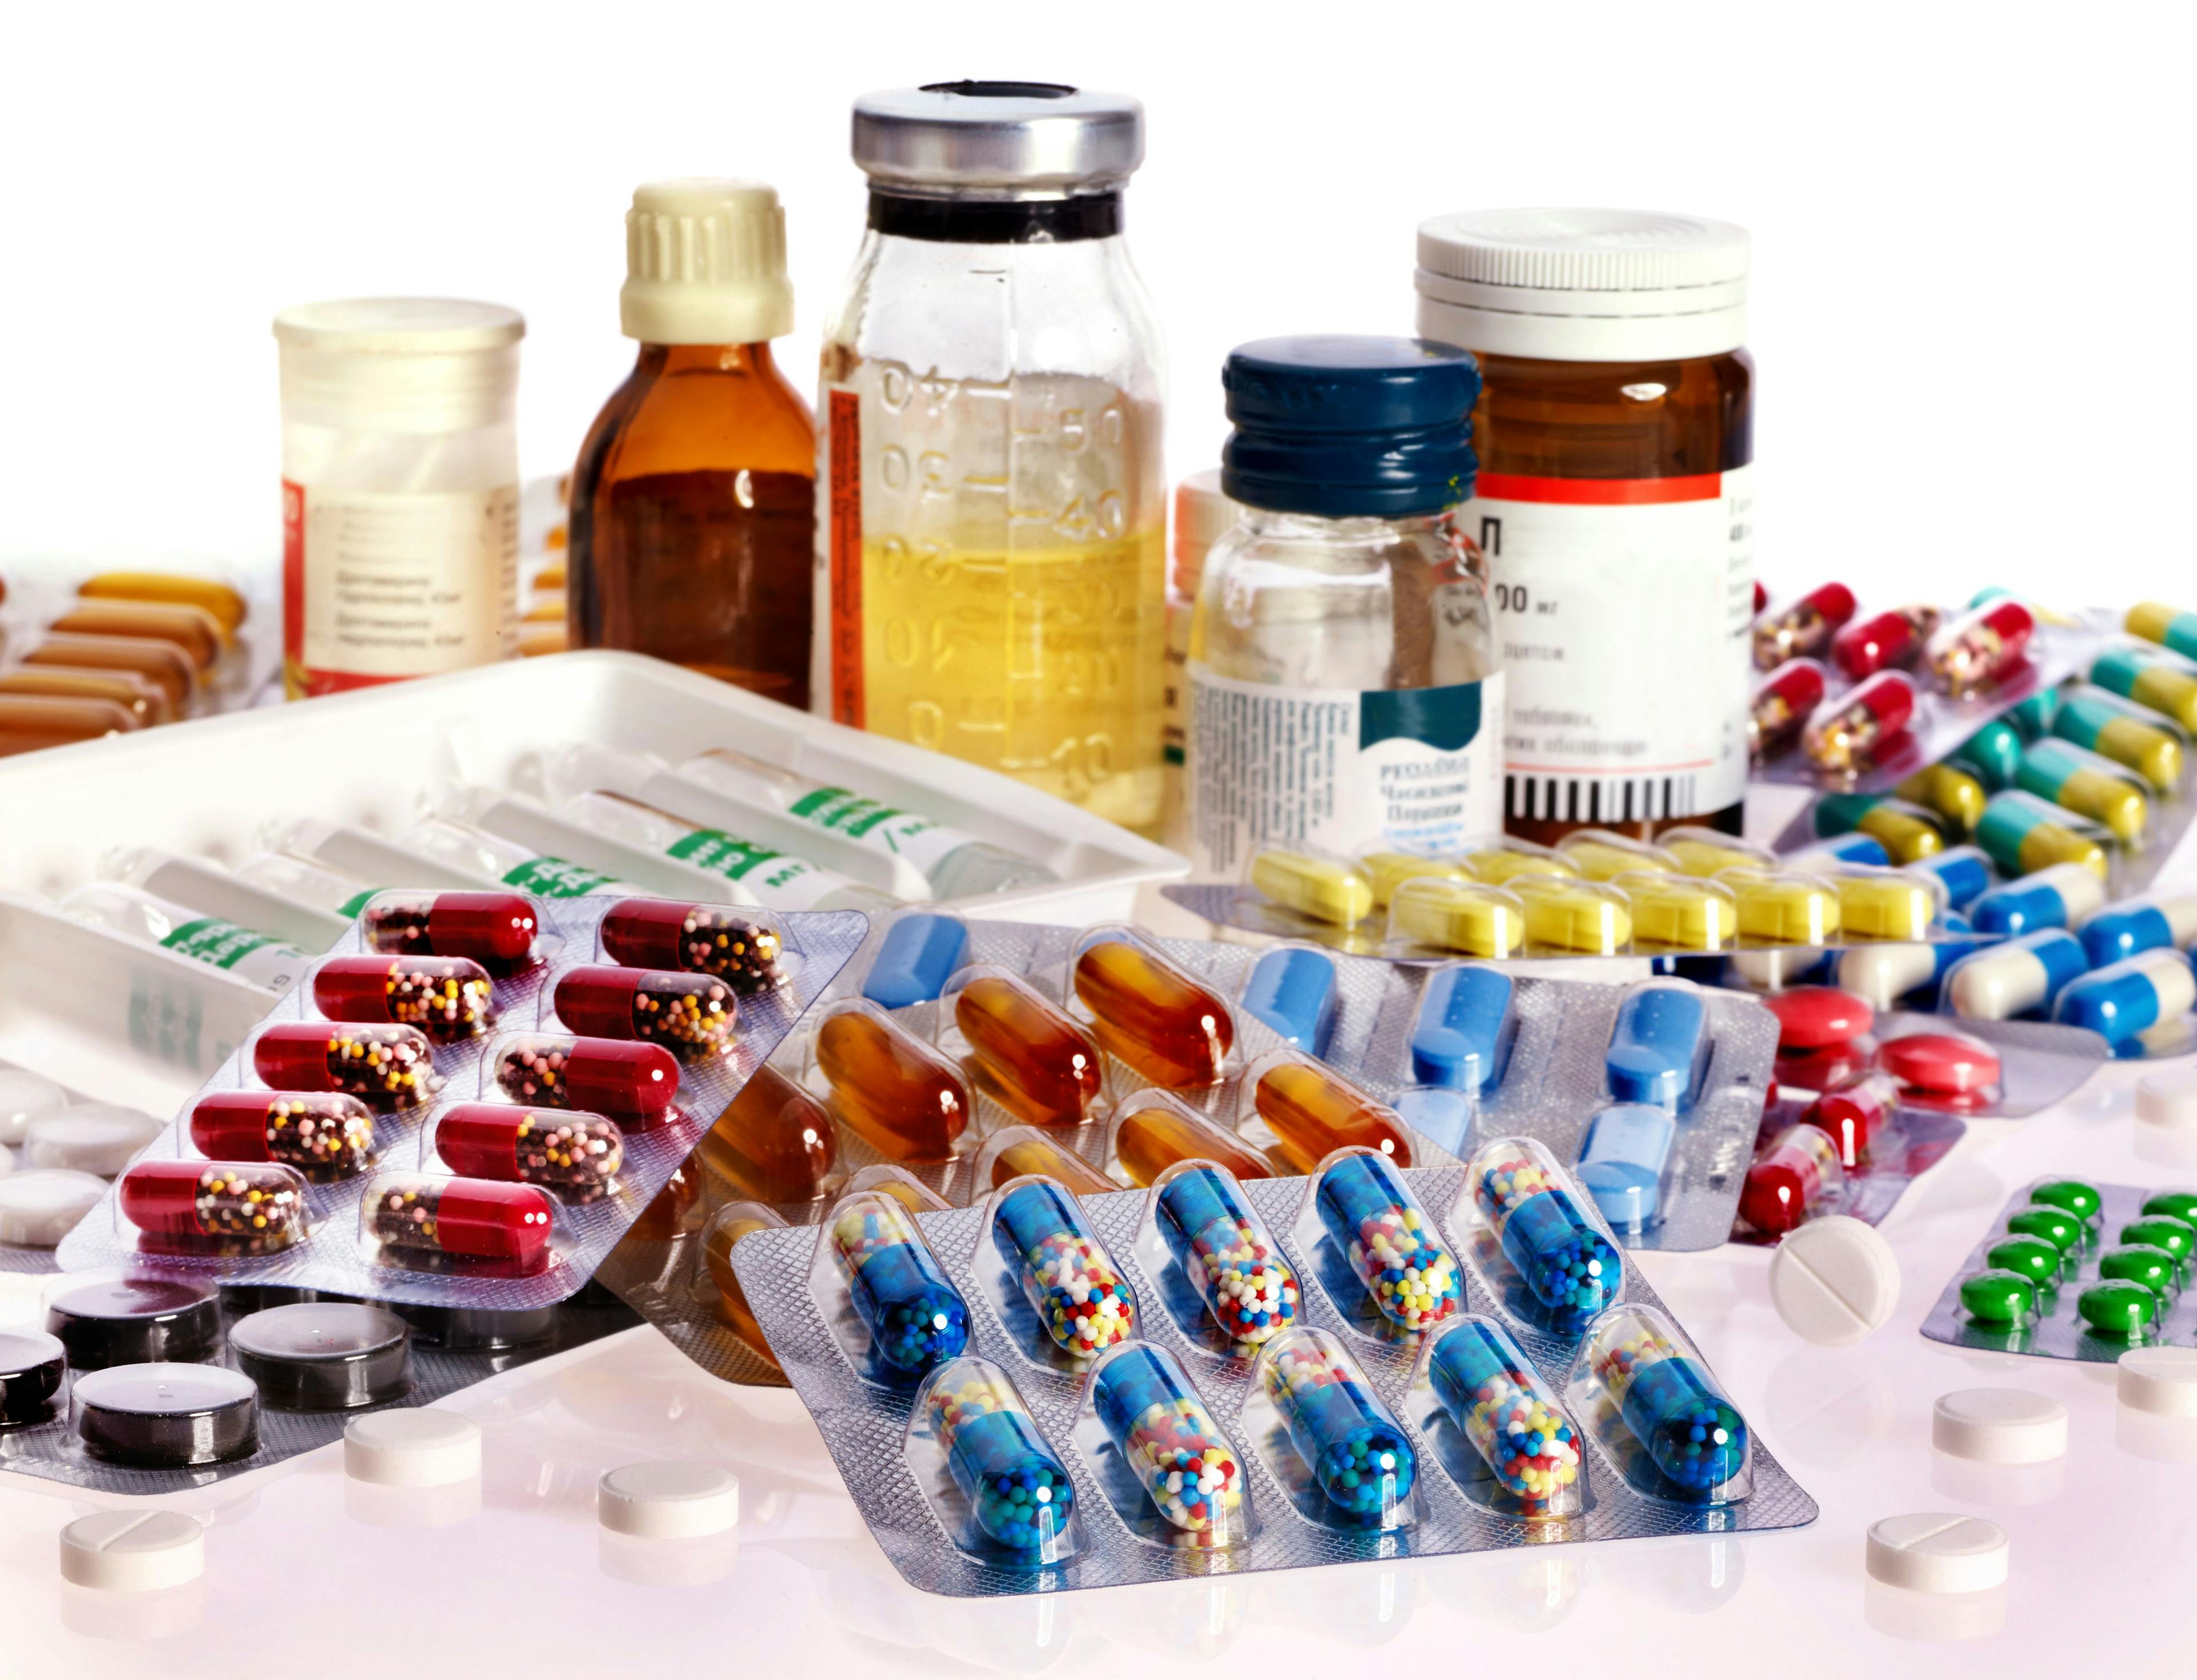 Stock art of medications and antibiotics